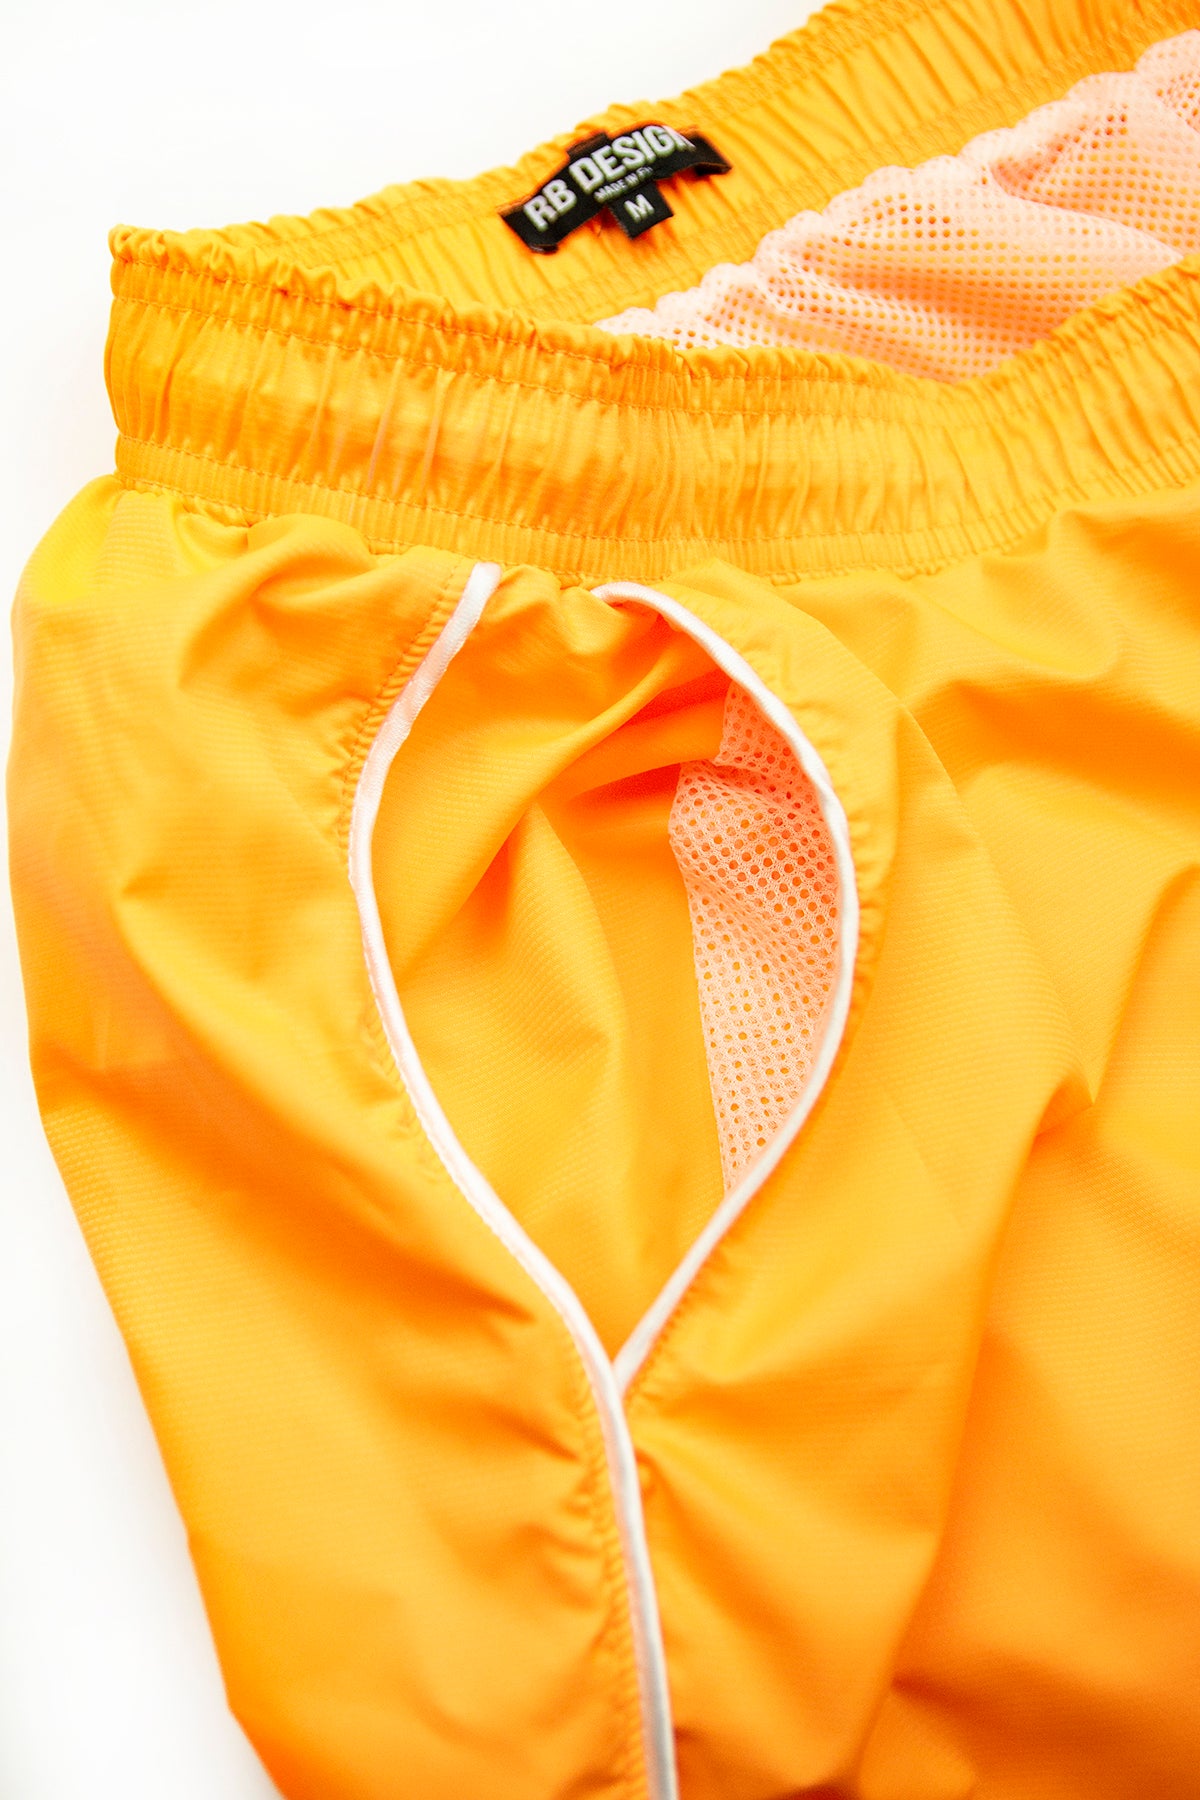 Bundle 3 - Orange Beach Shorts + Orange Hat + Tank Top MD885